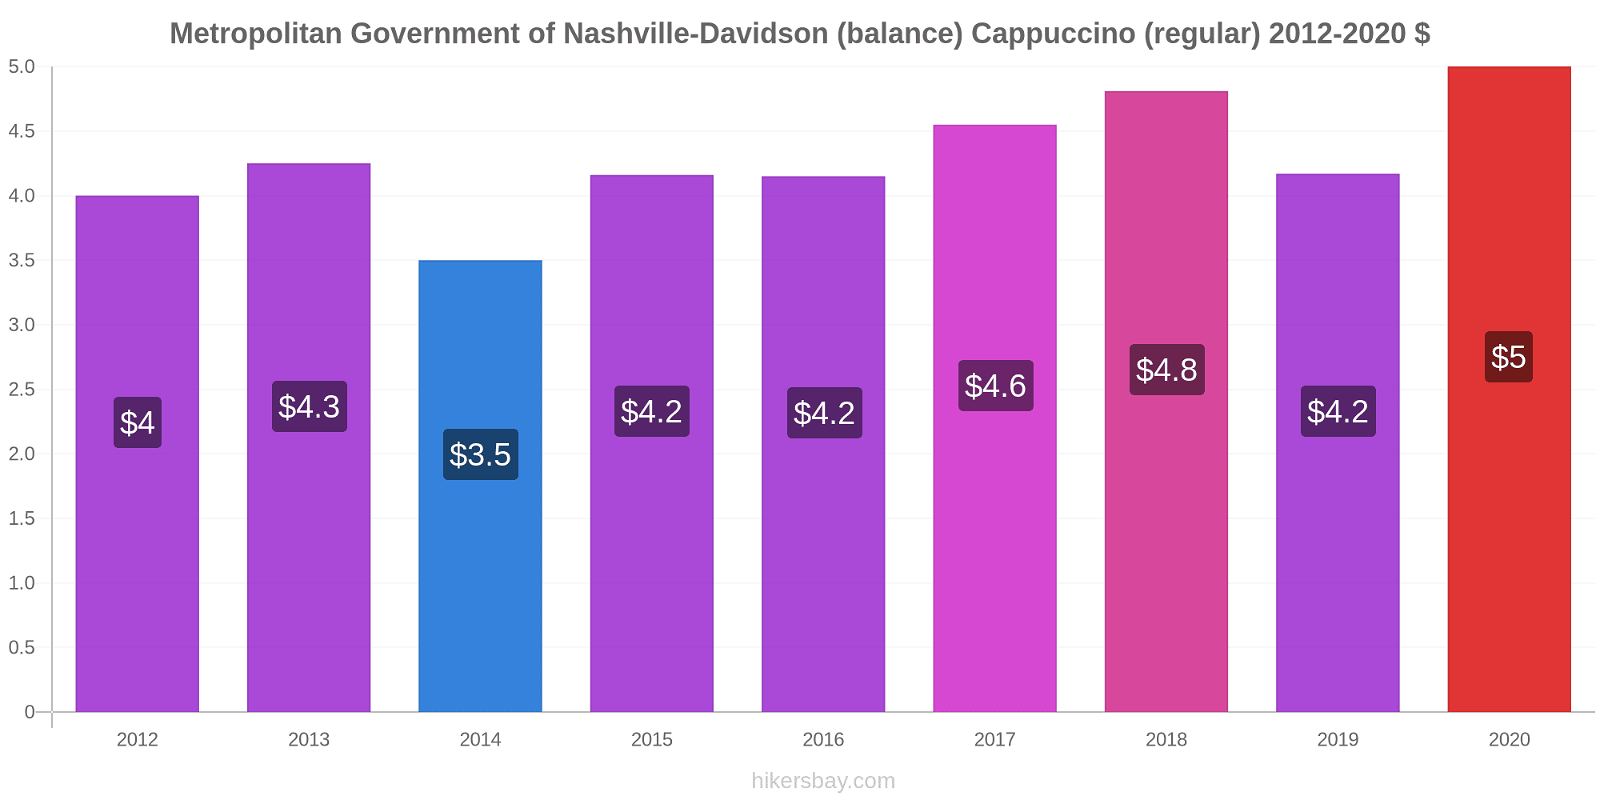 Metropolitan Government of Nashville-Davidson (balance) price changes Cappuccino (regular) hikersbay.com